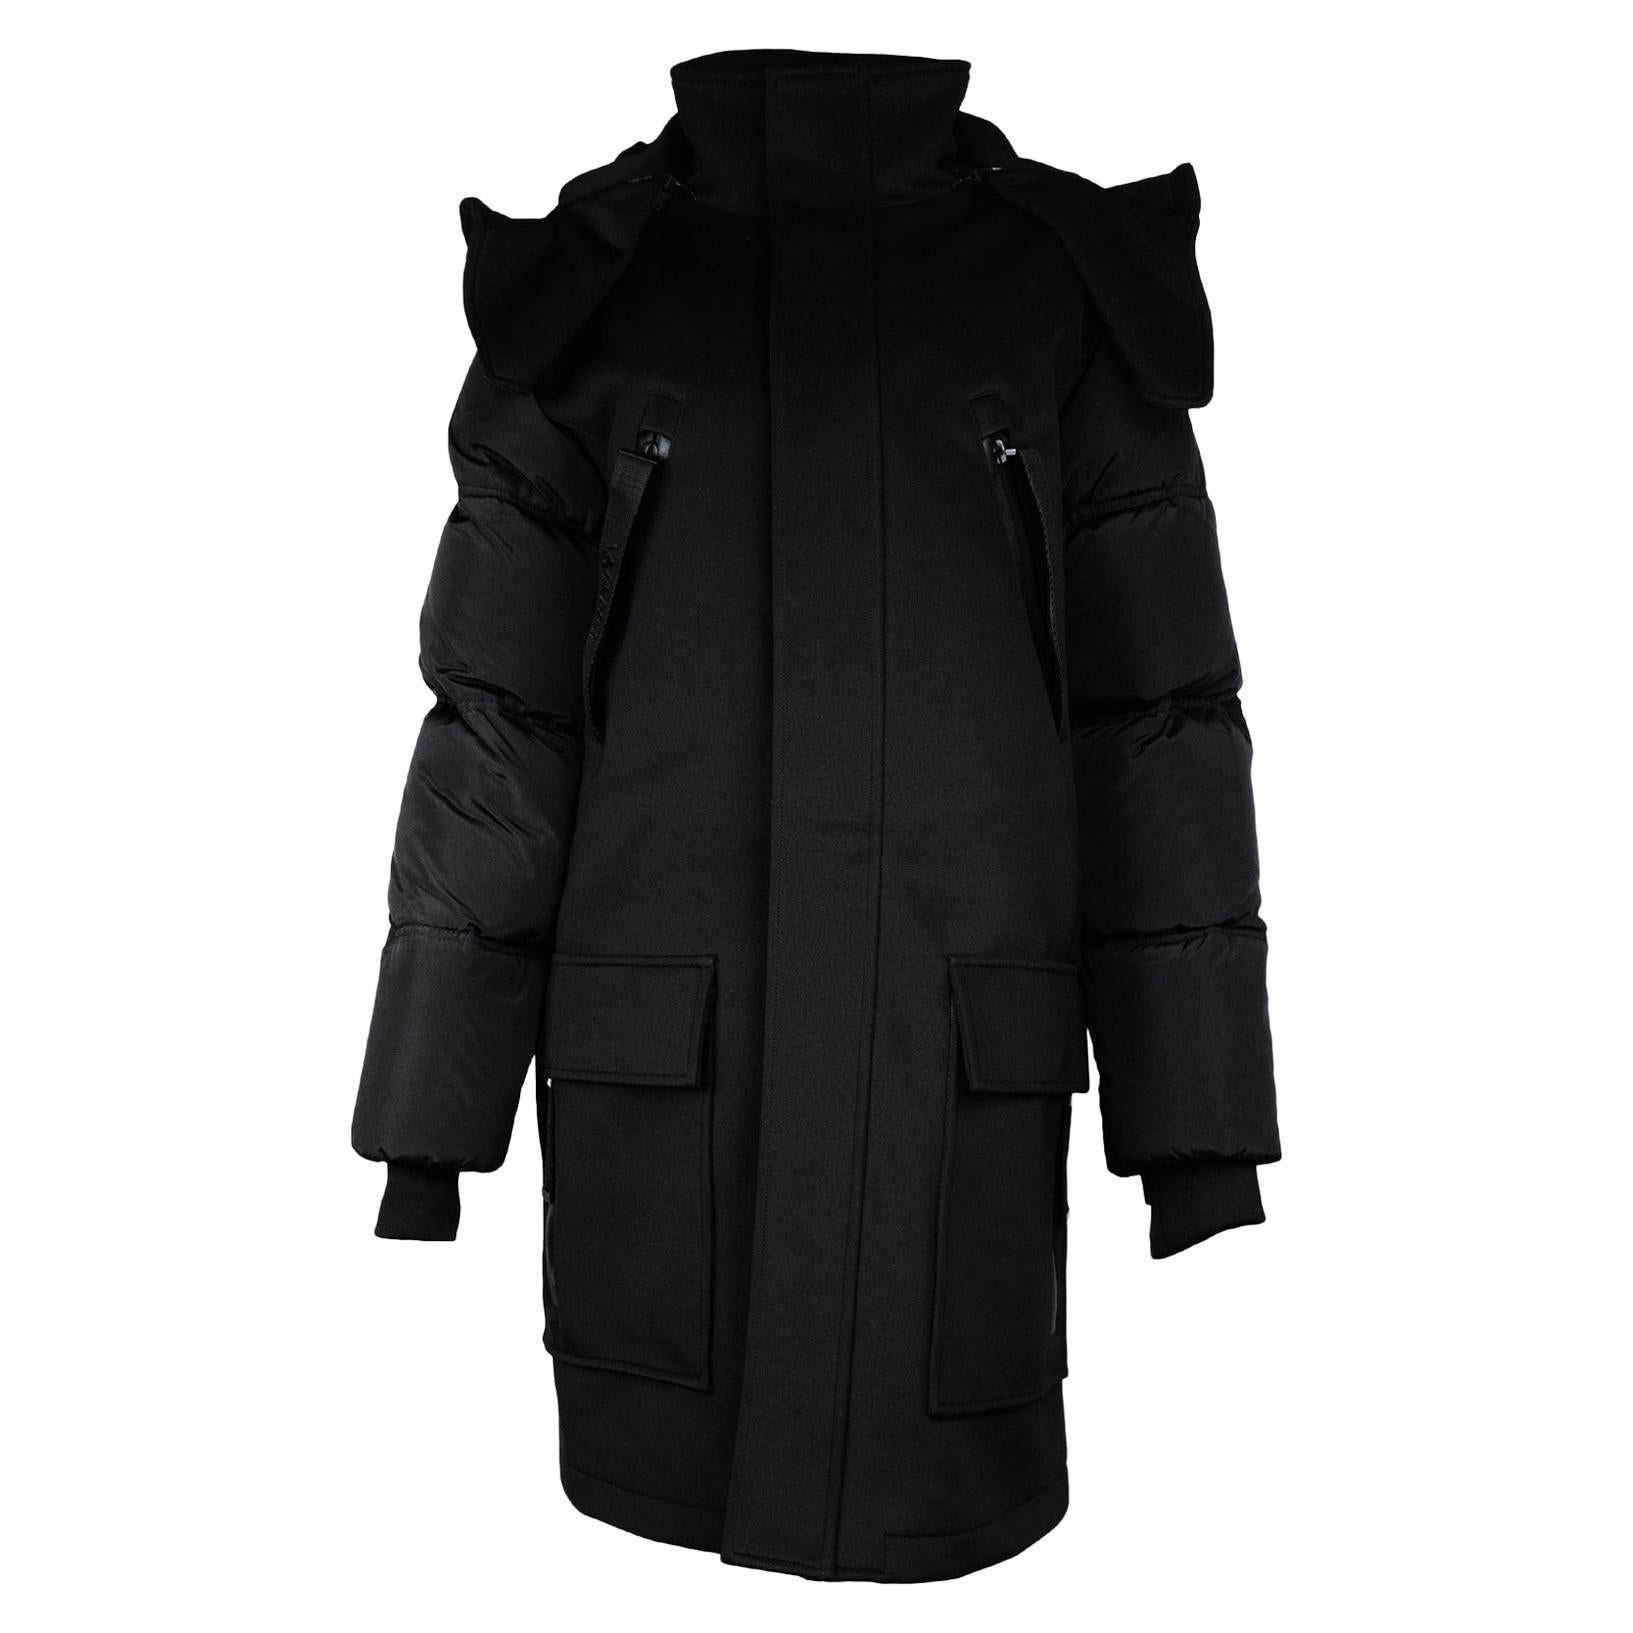 Alexander Wang x H&M 2014 Black Puffer Coat w/ Removable Lining Sz M